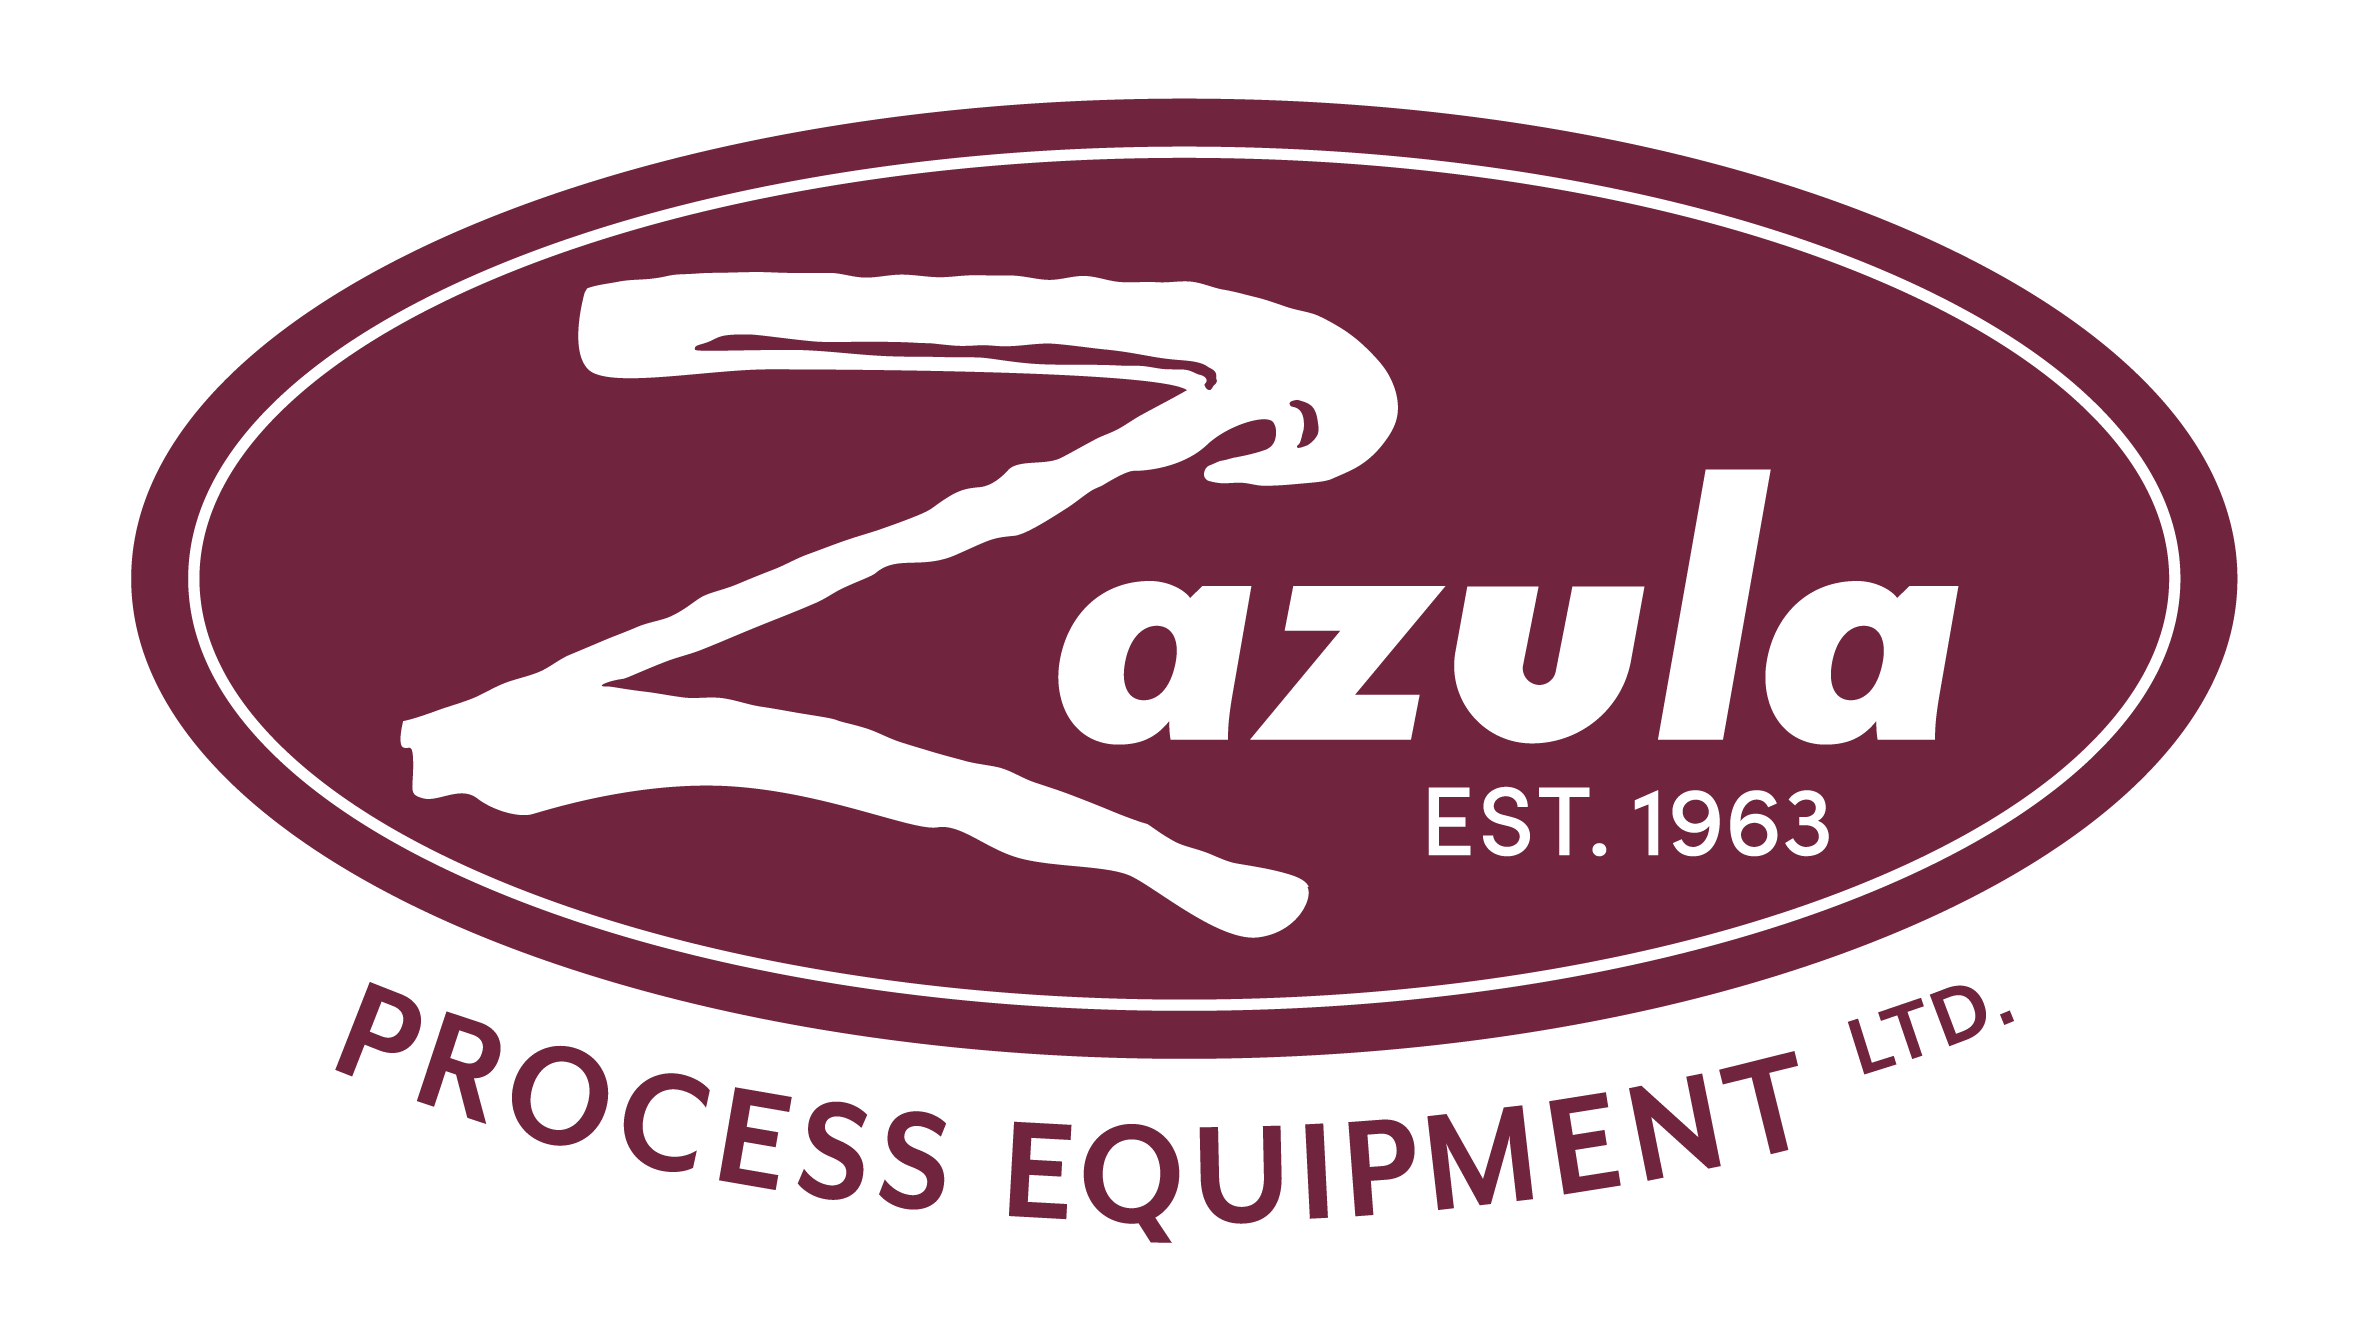 Zazula Process Equipment Ltd logo